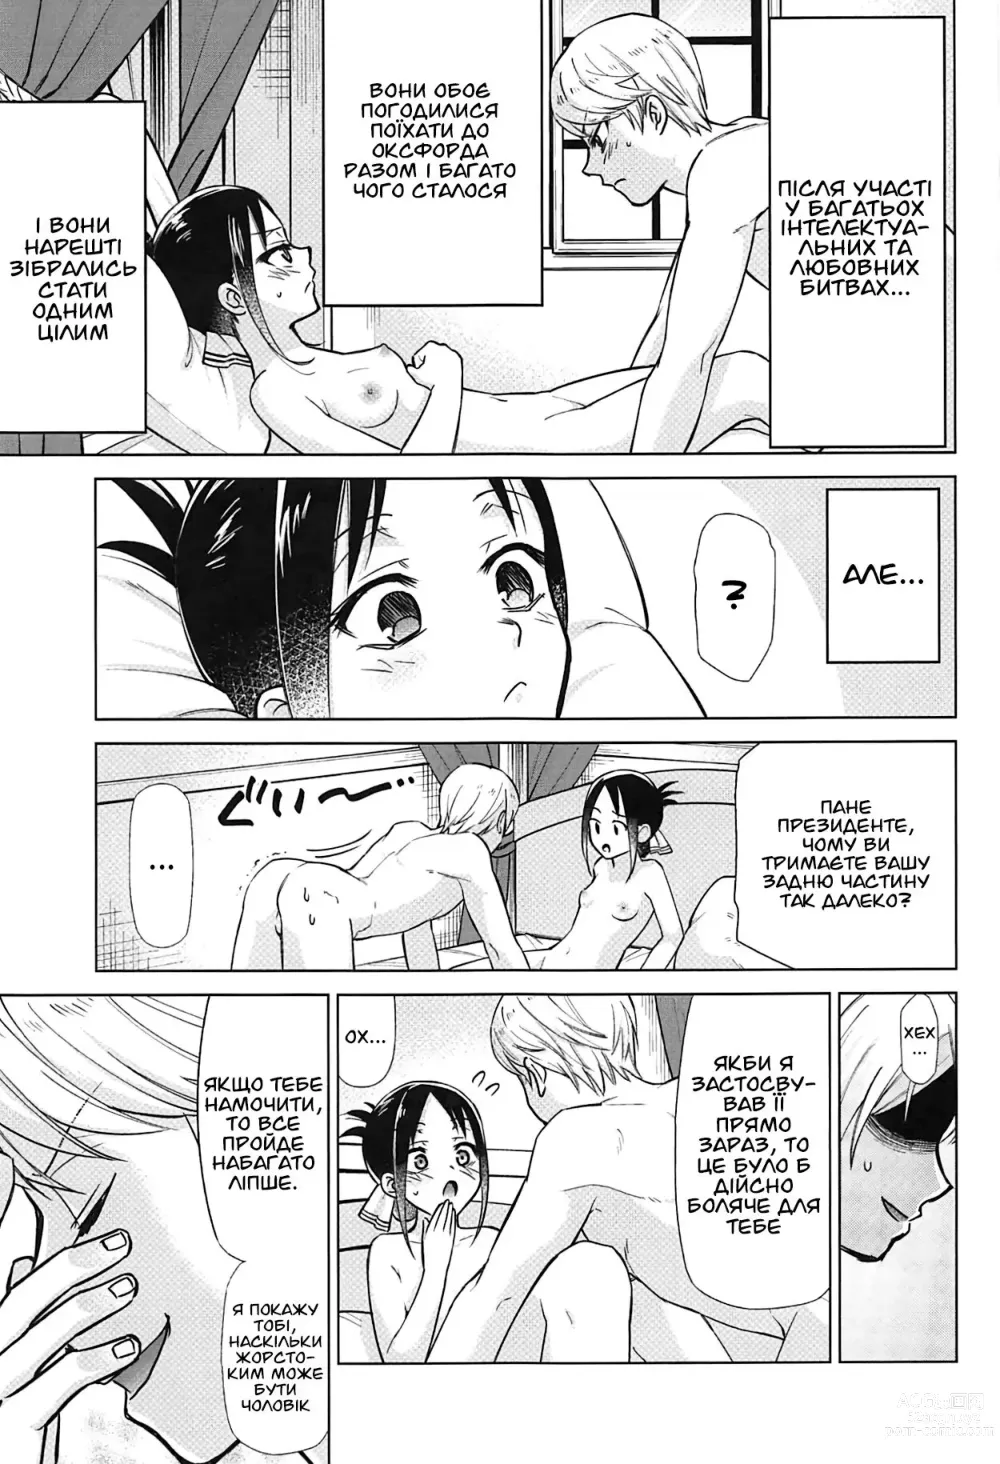 Page 4 of doujinshi Каґуя-сама хоче змусити його кінчити